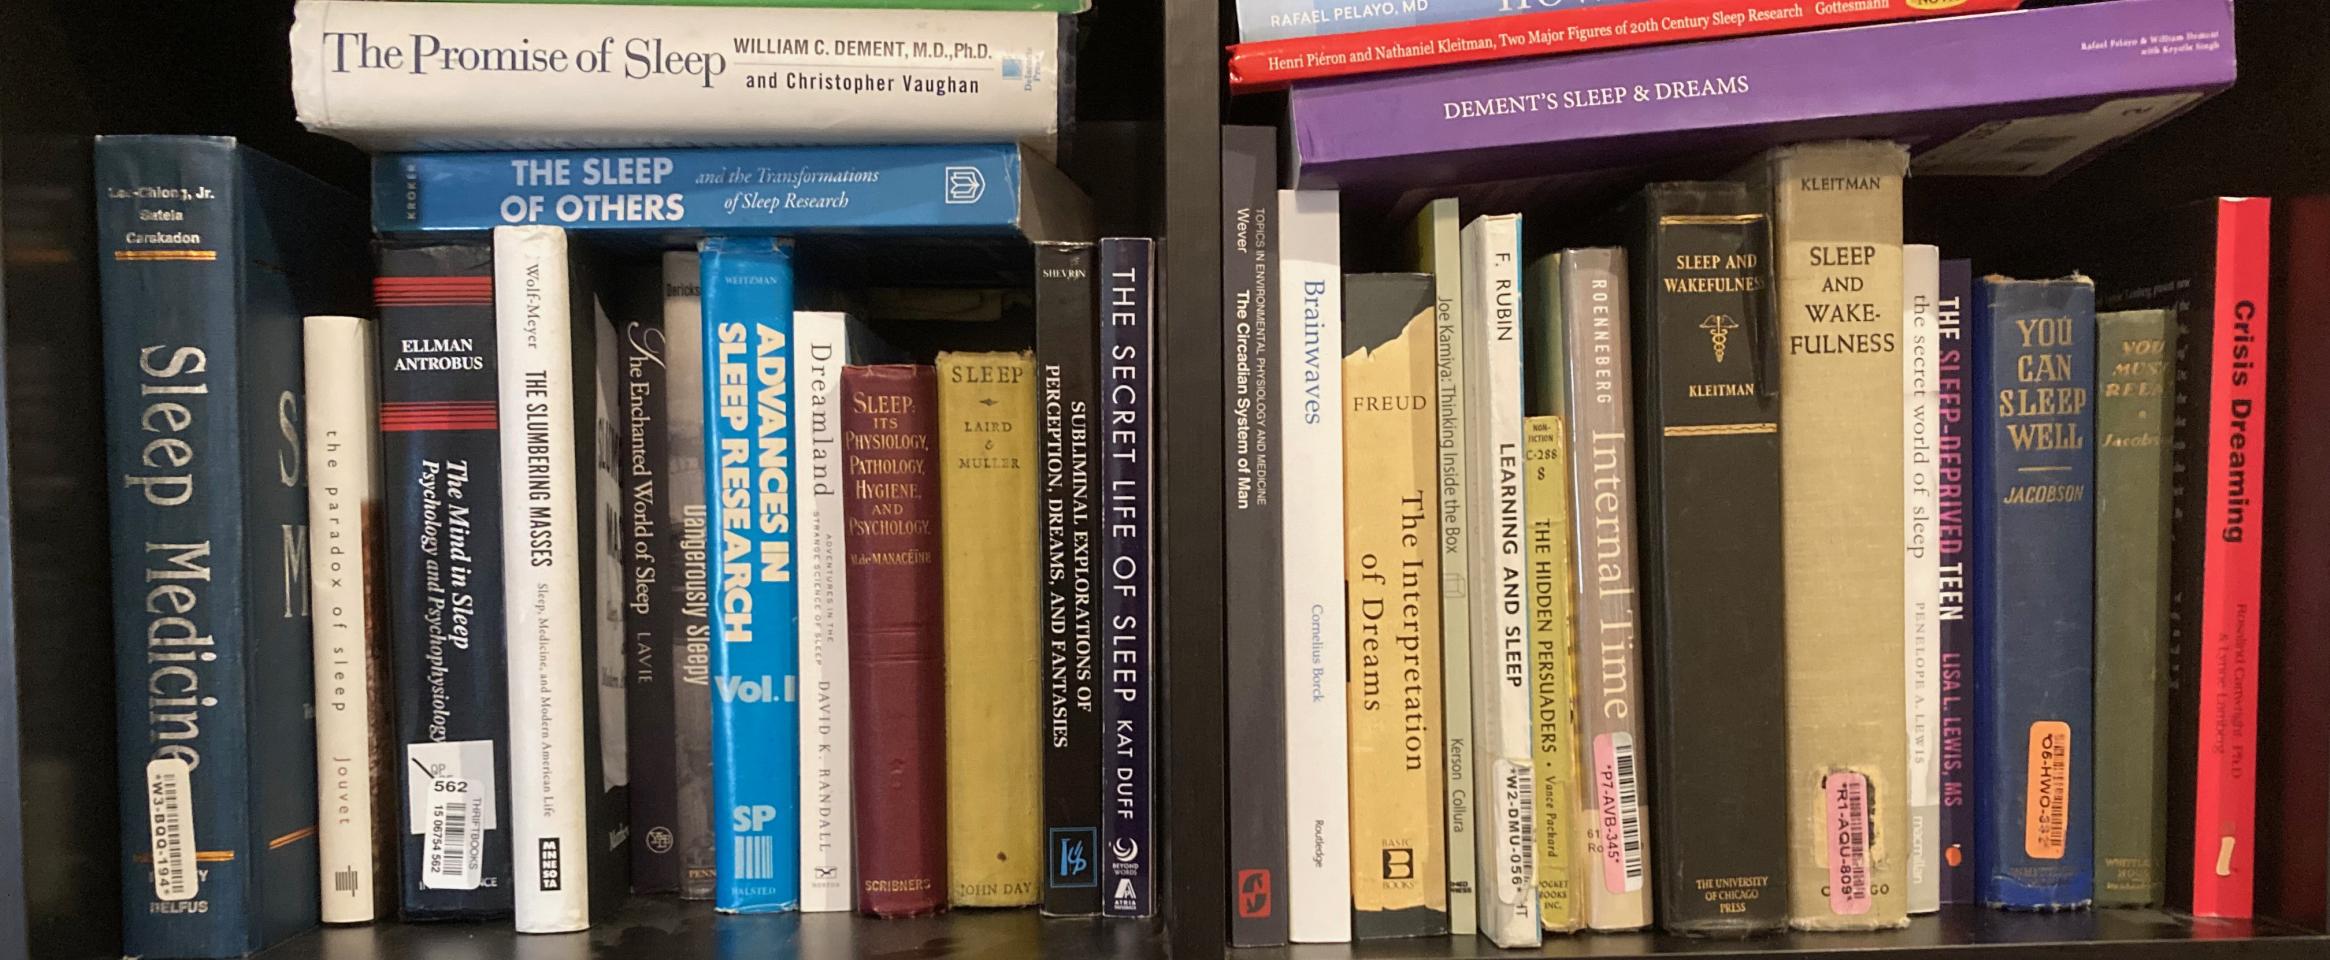 Rectangular photo of Kenneth Miller’s office bookshelf showing titles on sleep, sleep disorders, chronobiology, and dreams. Photo credit Kenneth Miller.